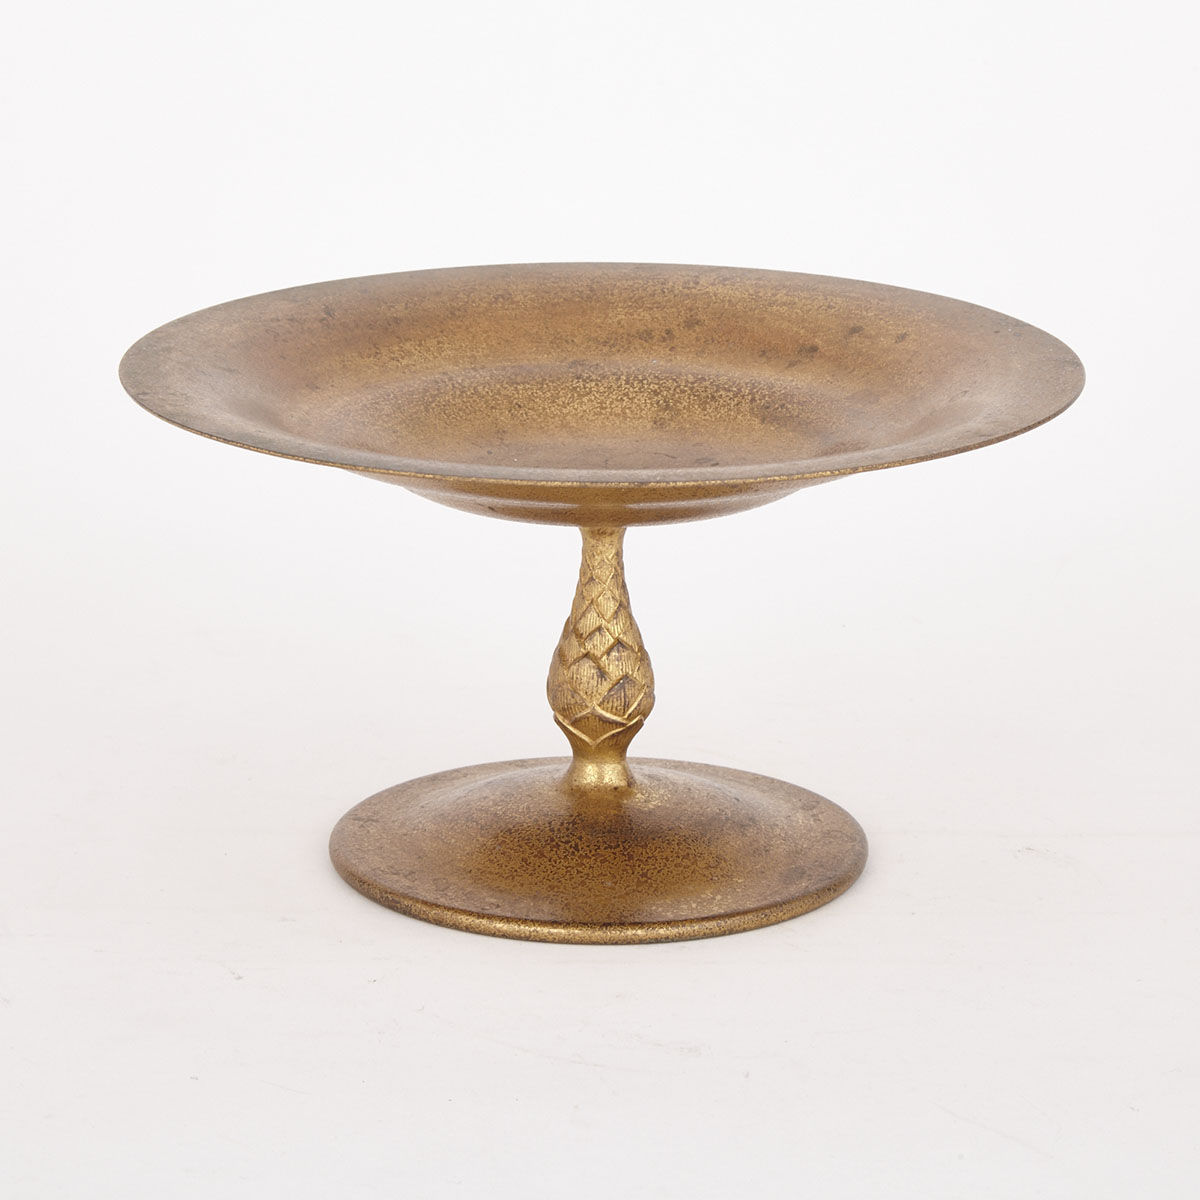 Tiffany Studios, New York, Gilt Bronze ‘Artichoke’ Pattern Tazza, c.1910